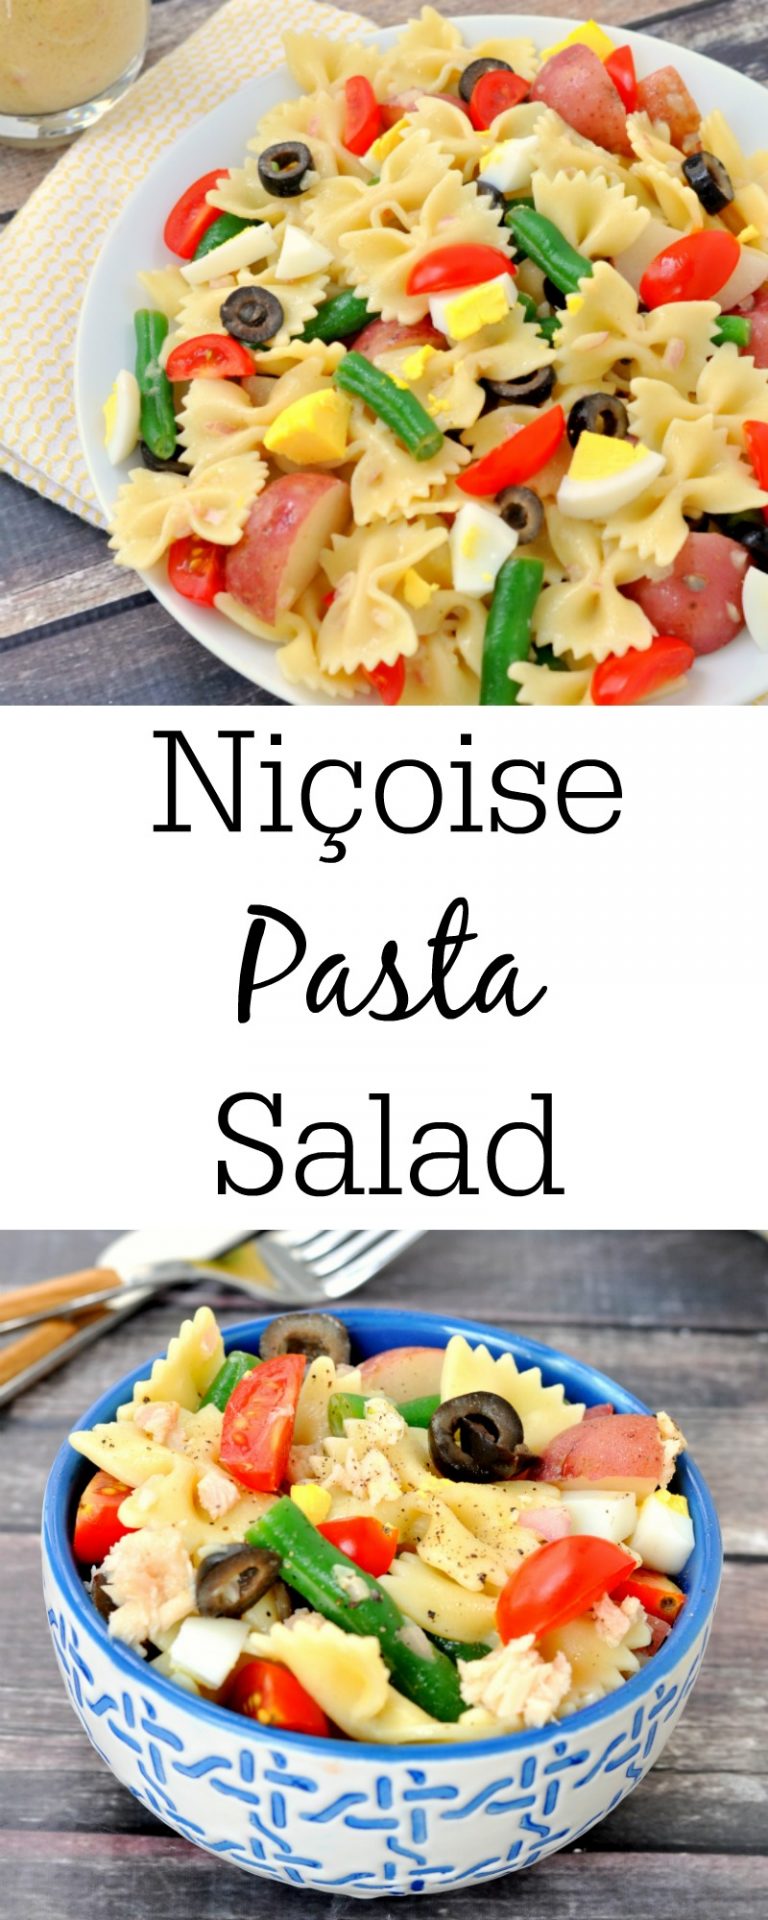 Niçoise Pasta Salad - An Amazing Summer Pasta Salad Recipe!